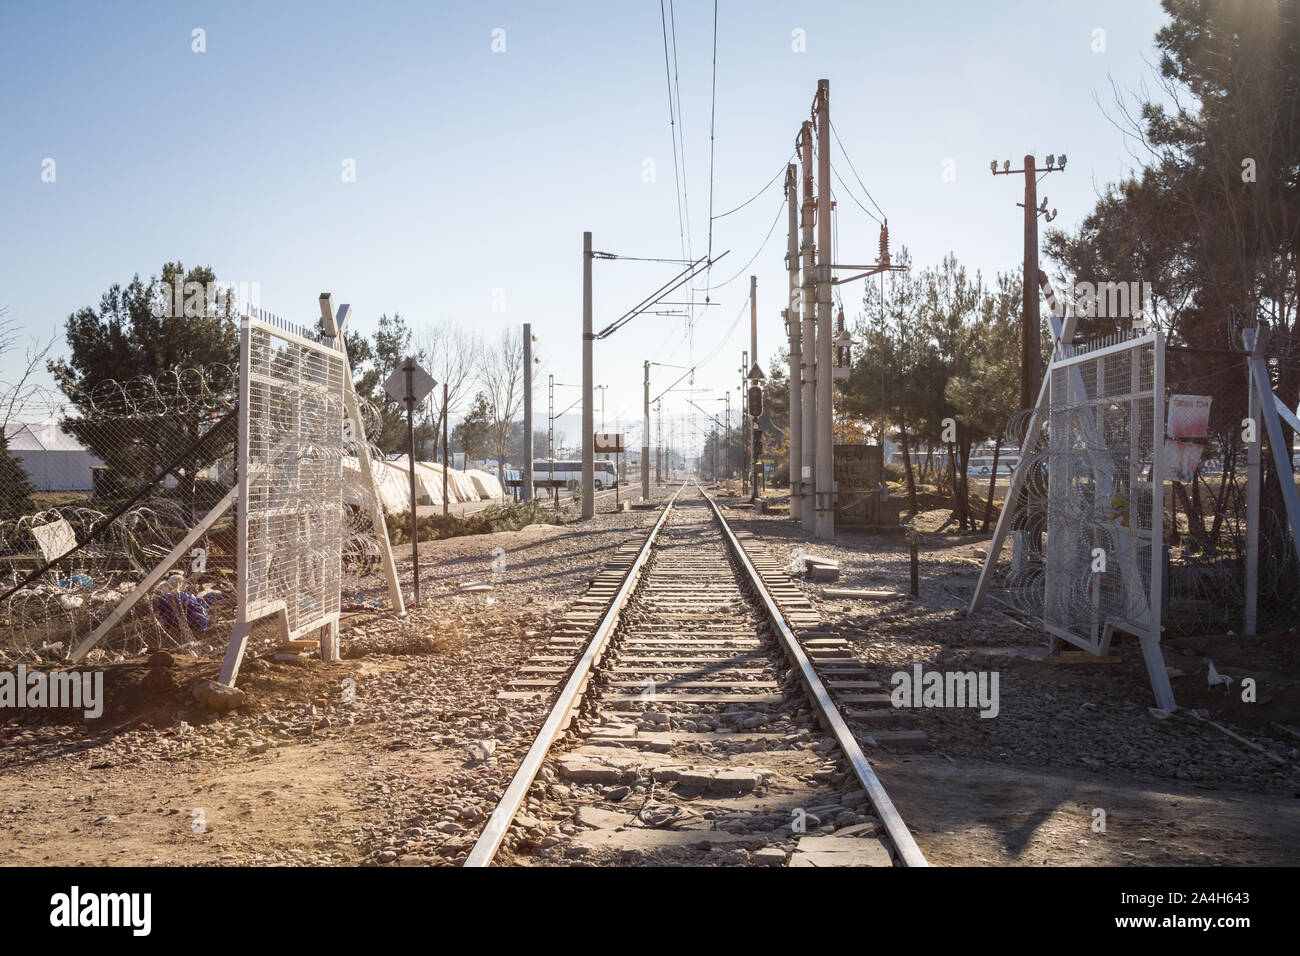 GEVGELIJA, MACEDONIA - DECEMBER 23, 2015: Railway line crossing the border fence wall at the Macedonia Greece border built during the refugee crisis o Stock Photo